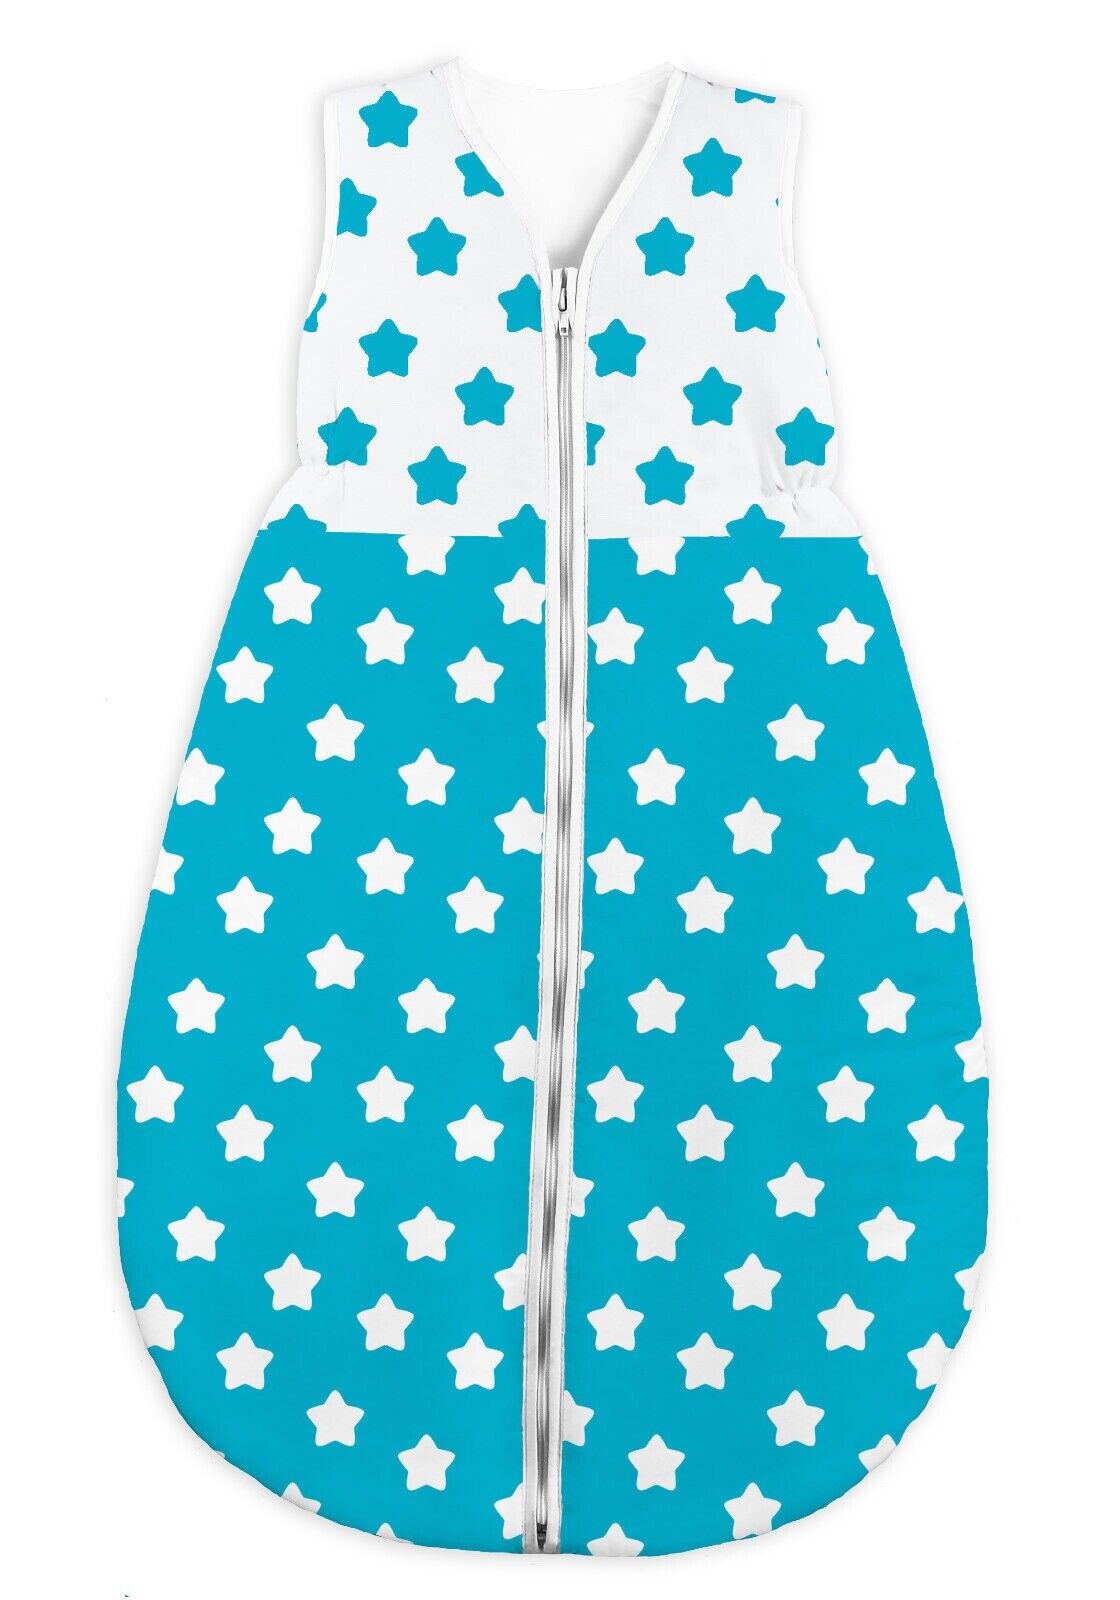 Baby sleeping bag short sleeve 18-36 months 98cm Big turquoise star